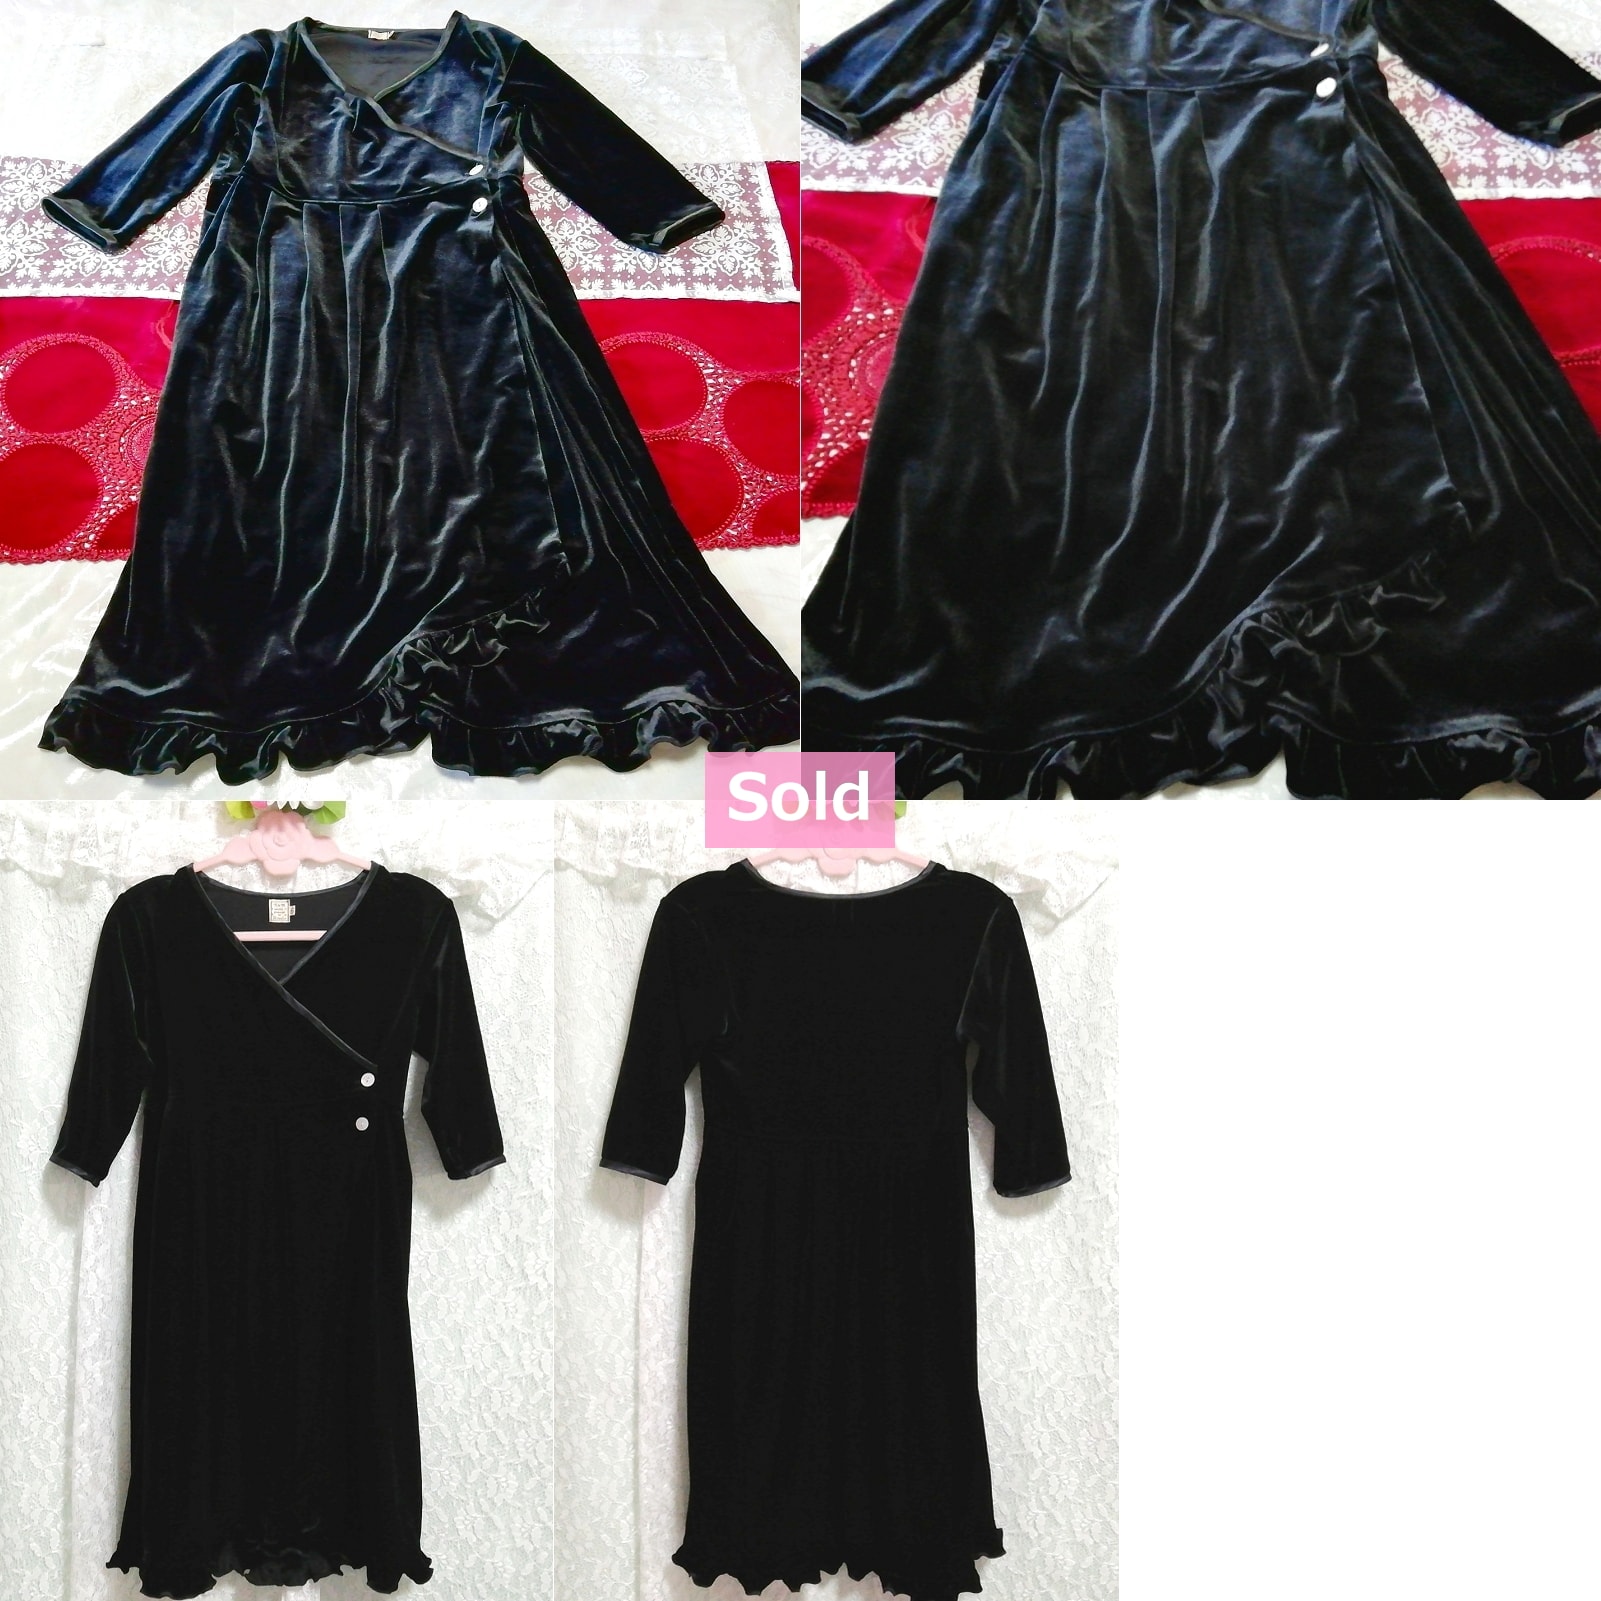 Black velor haori long sleeve long tunic negligee nightgown nightwear dress, tunic, long sleeve, m size